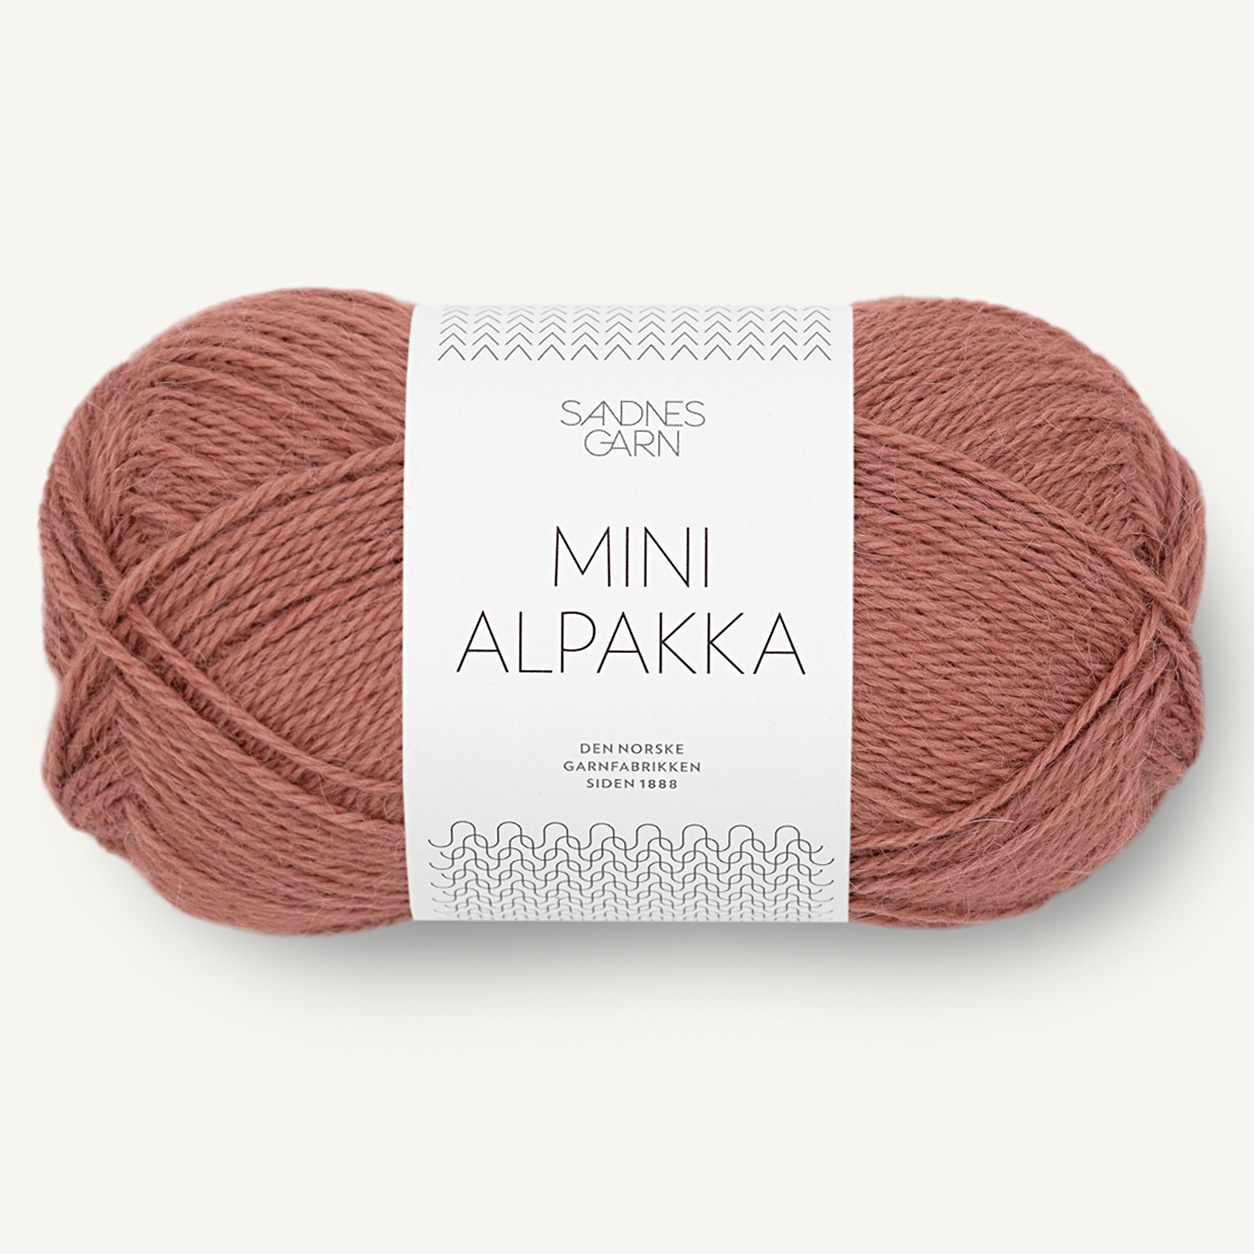 Sandnes Mini Alpakka, 3553, Mattes Rouge